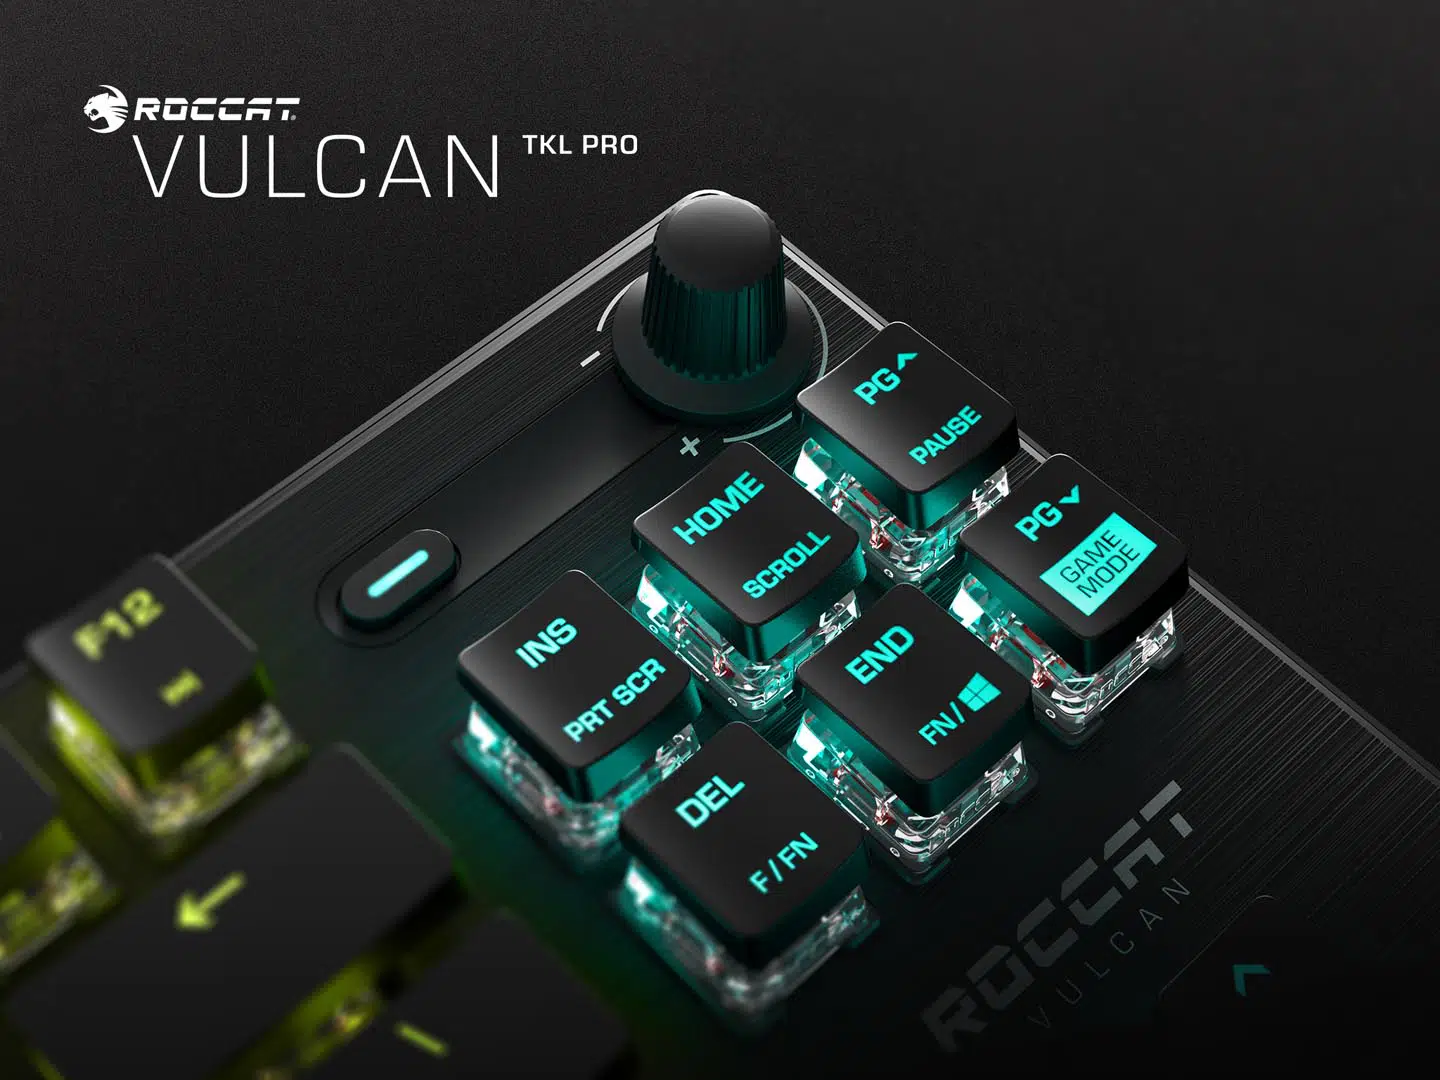 ROCCAT Vulcan TKL Pro Dr Disrespect Keyboard has a tenkeyless form